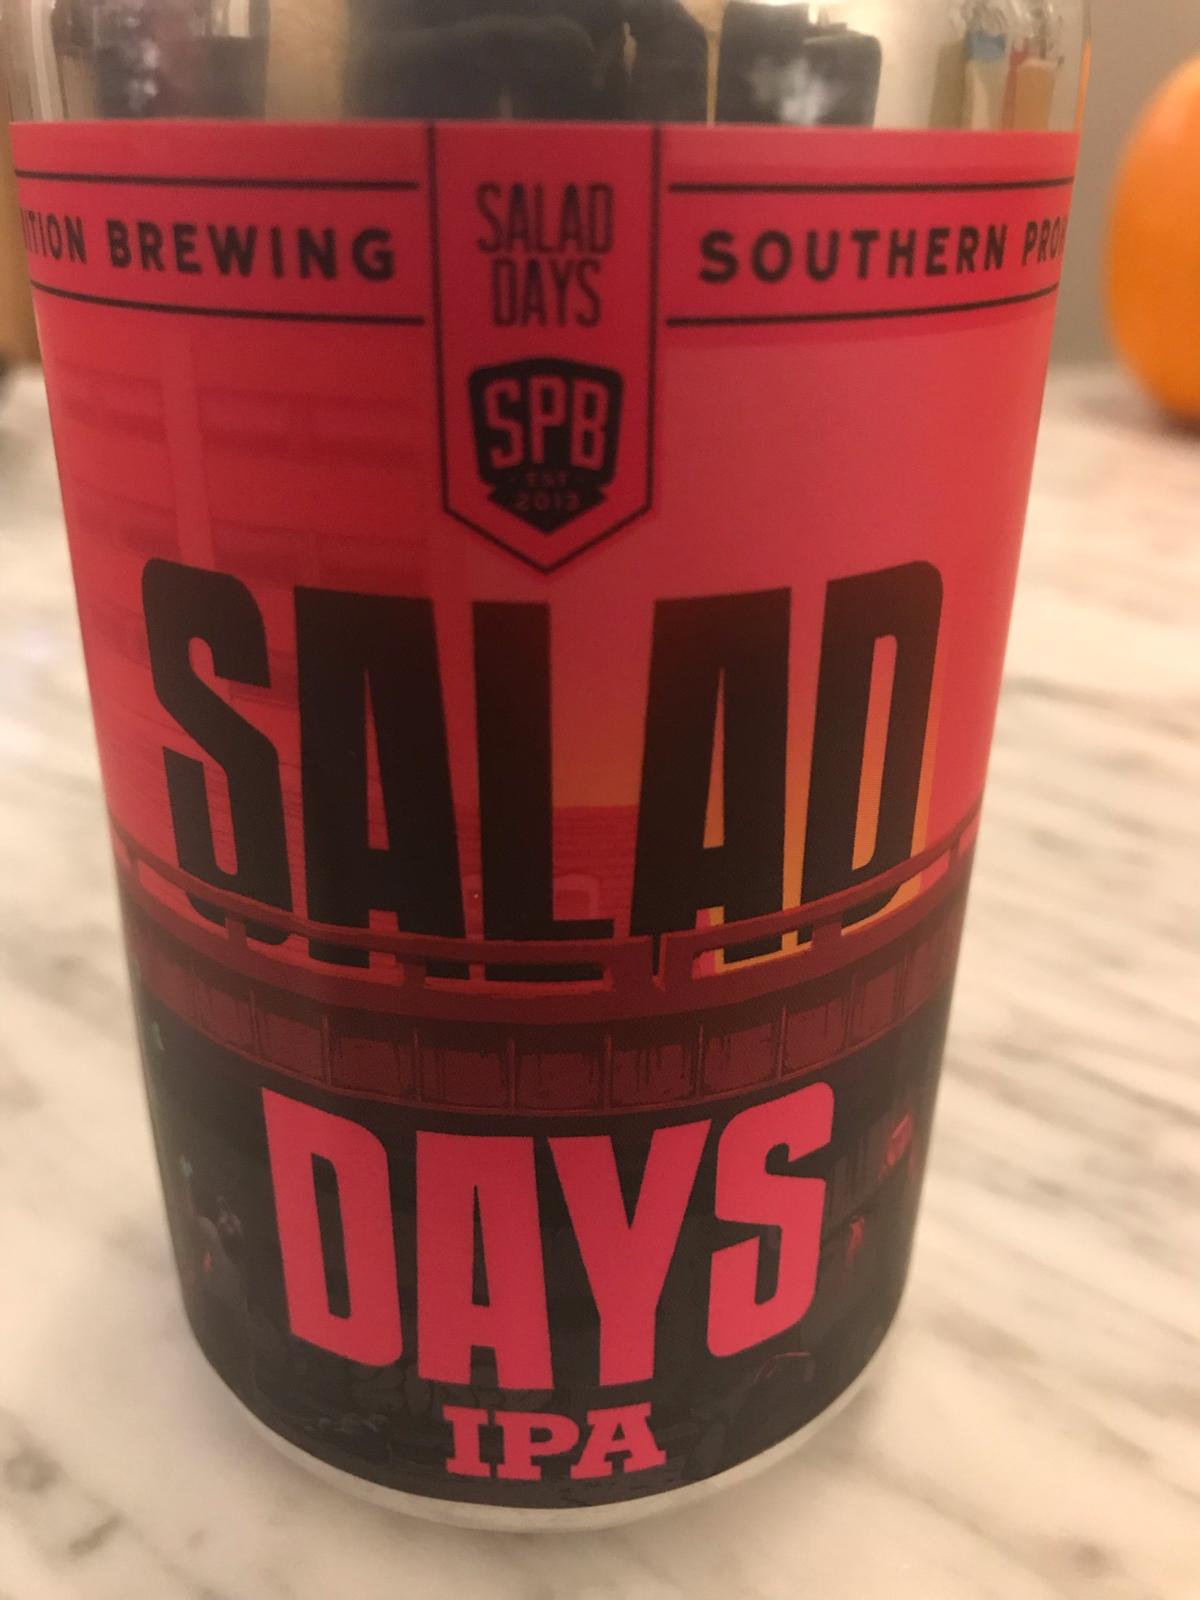 Salad Days IPA